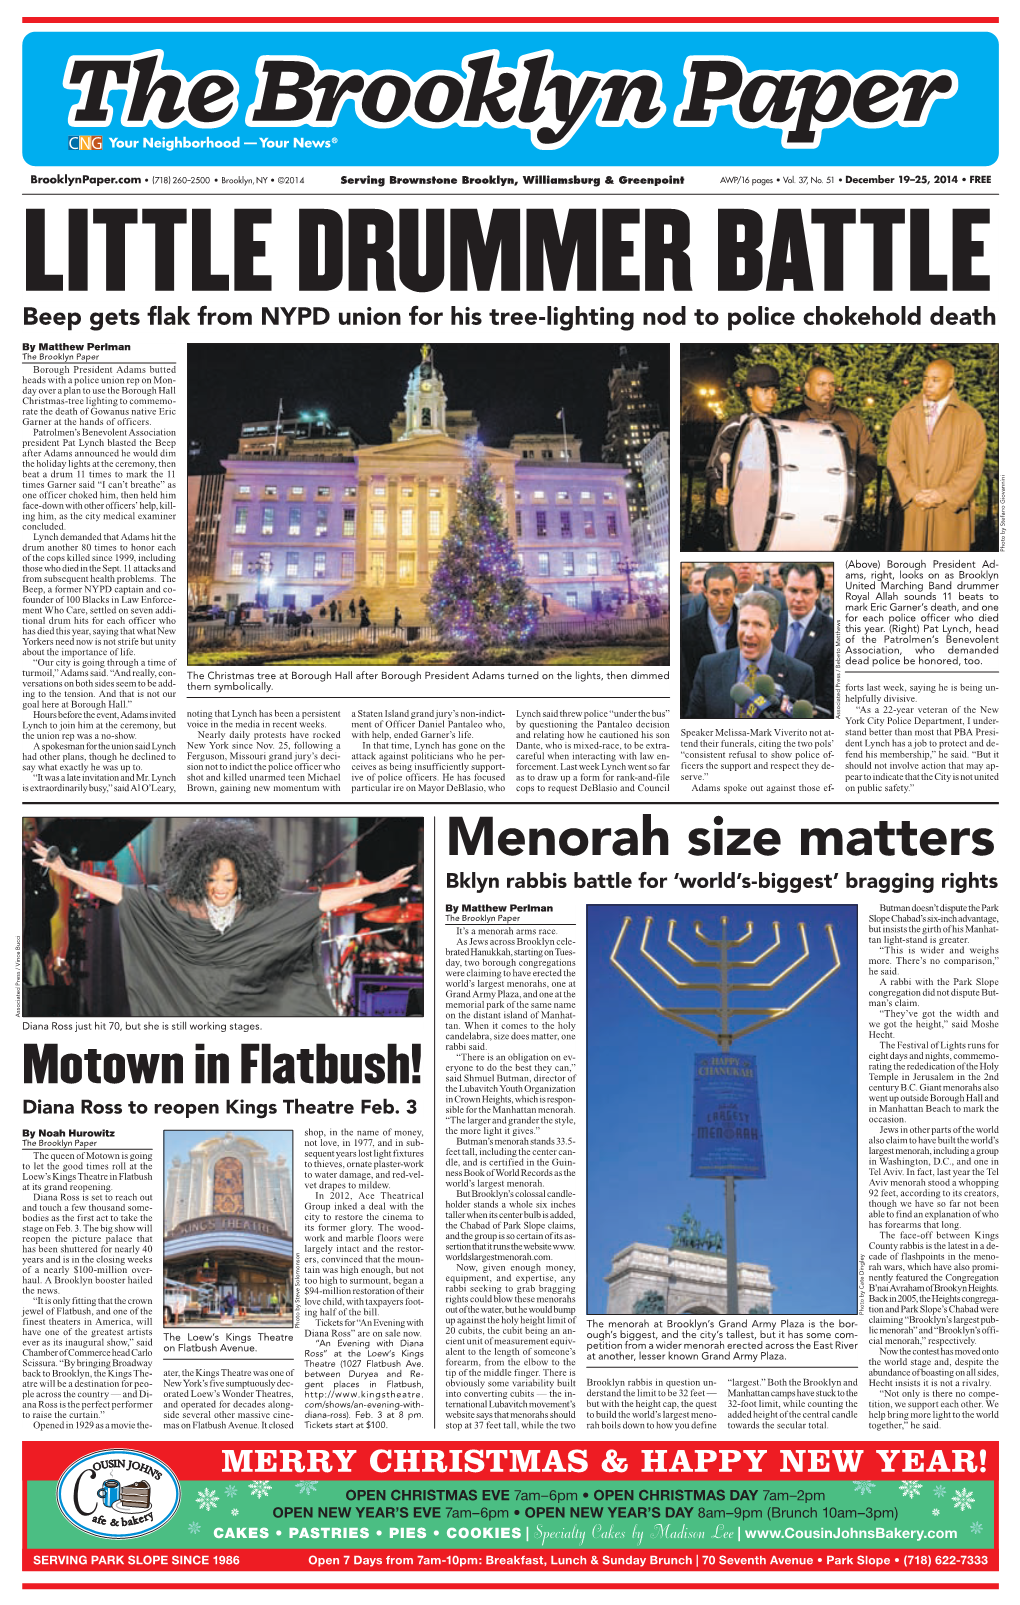 Menorah Size Matters Bklyn Rabbis Battle for ‘World’S-Biggest’ Bragging Rights